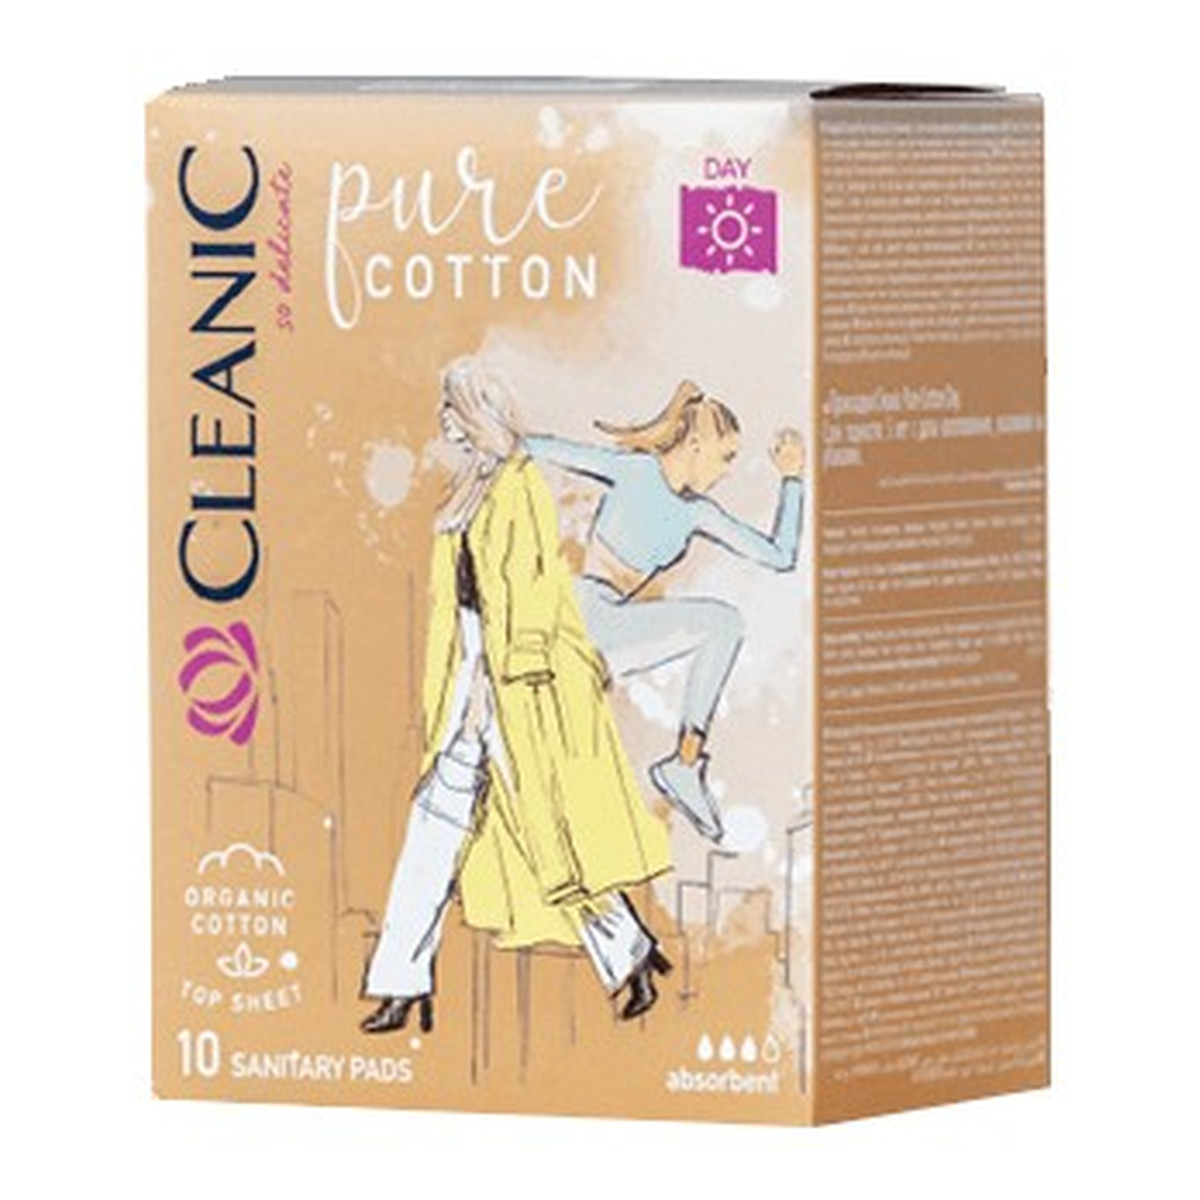 Cleanic Pure Cotton Podpaski higieniczne Organic - na dzień 10szt